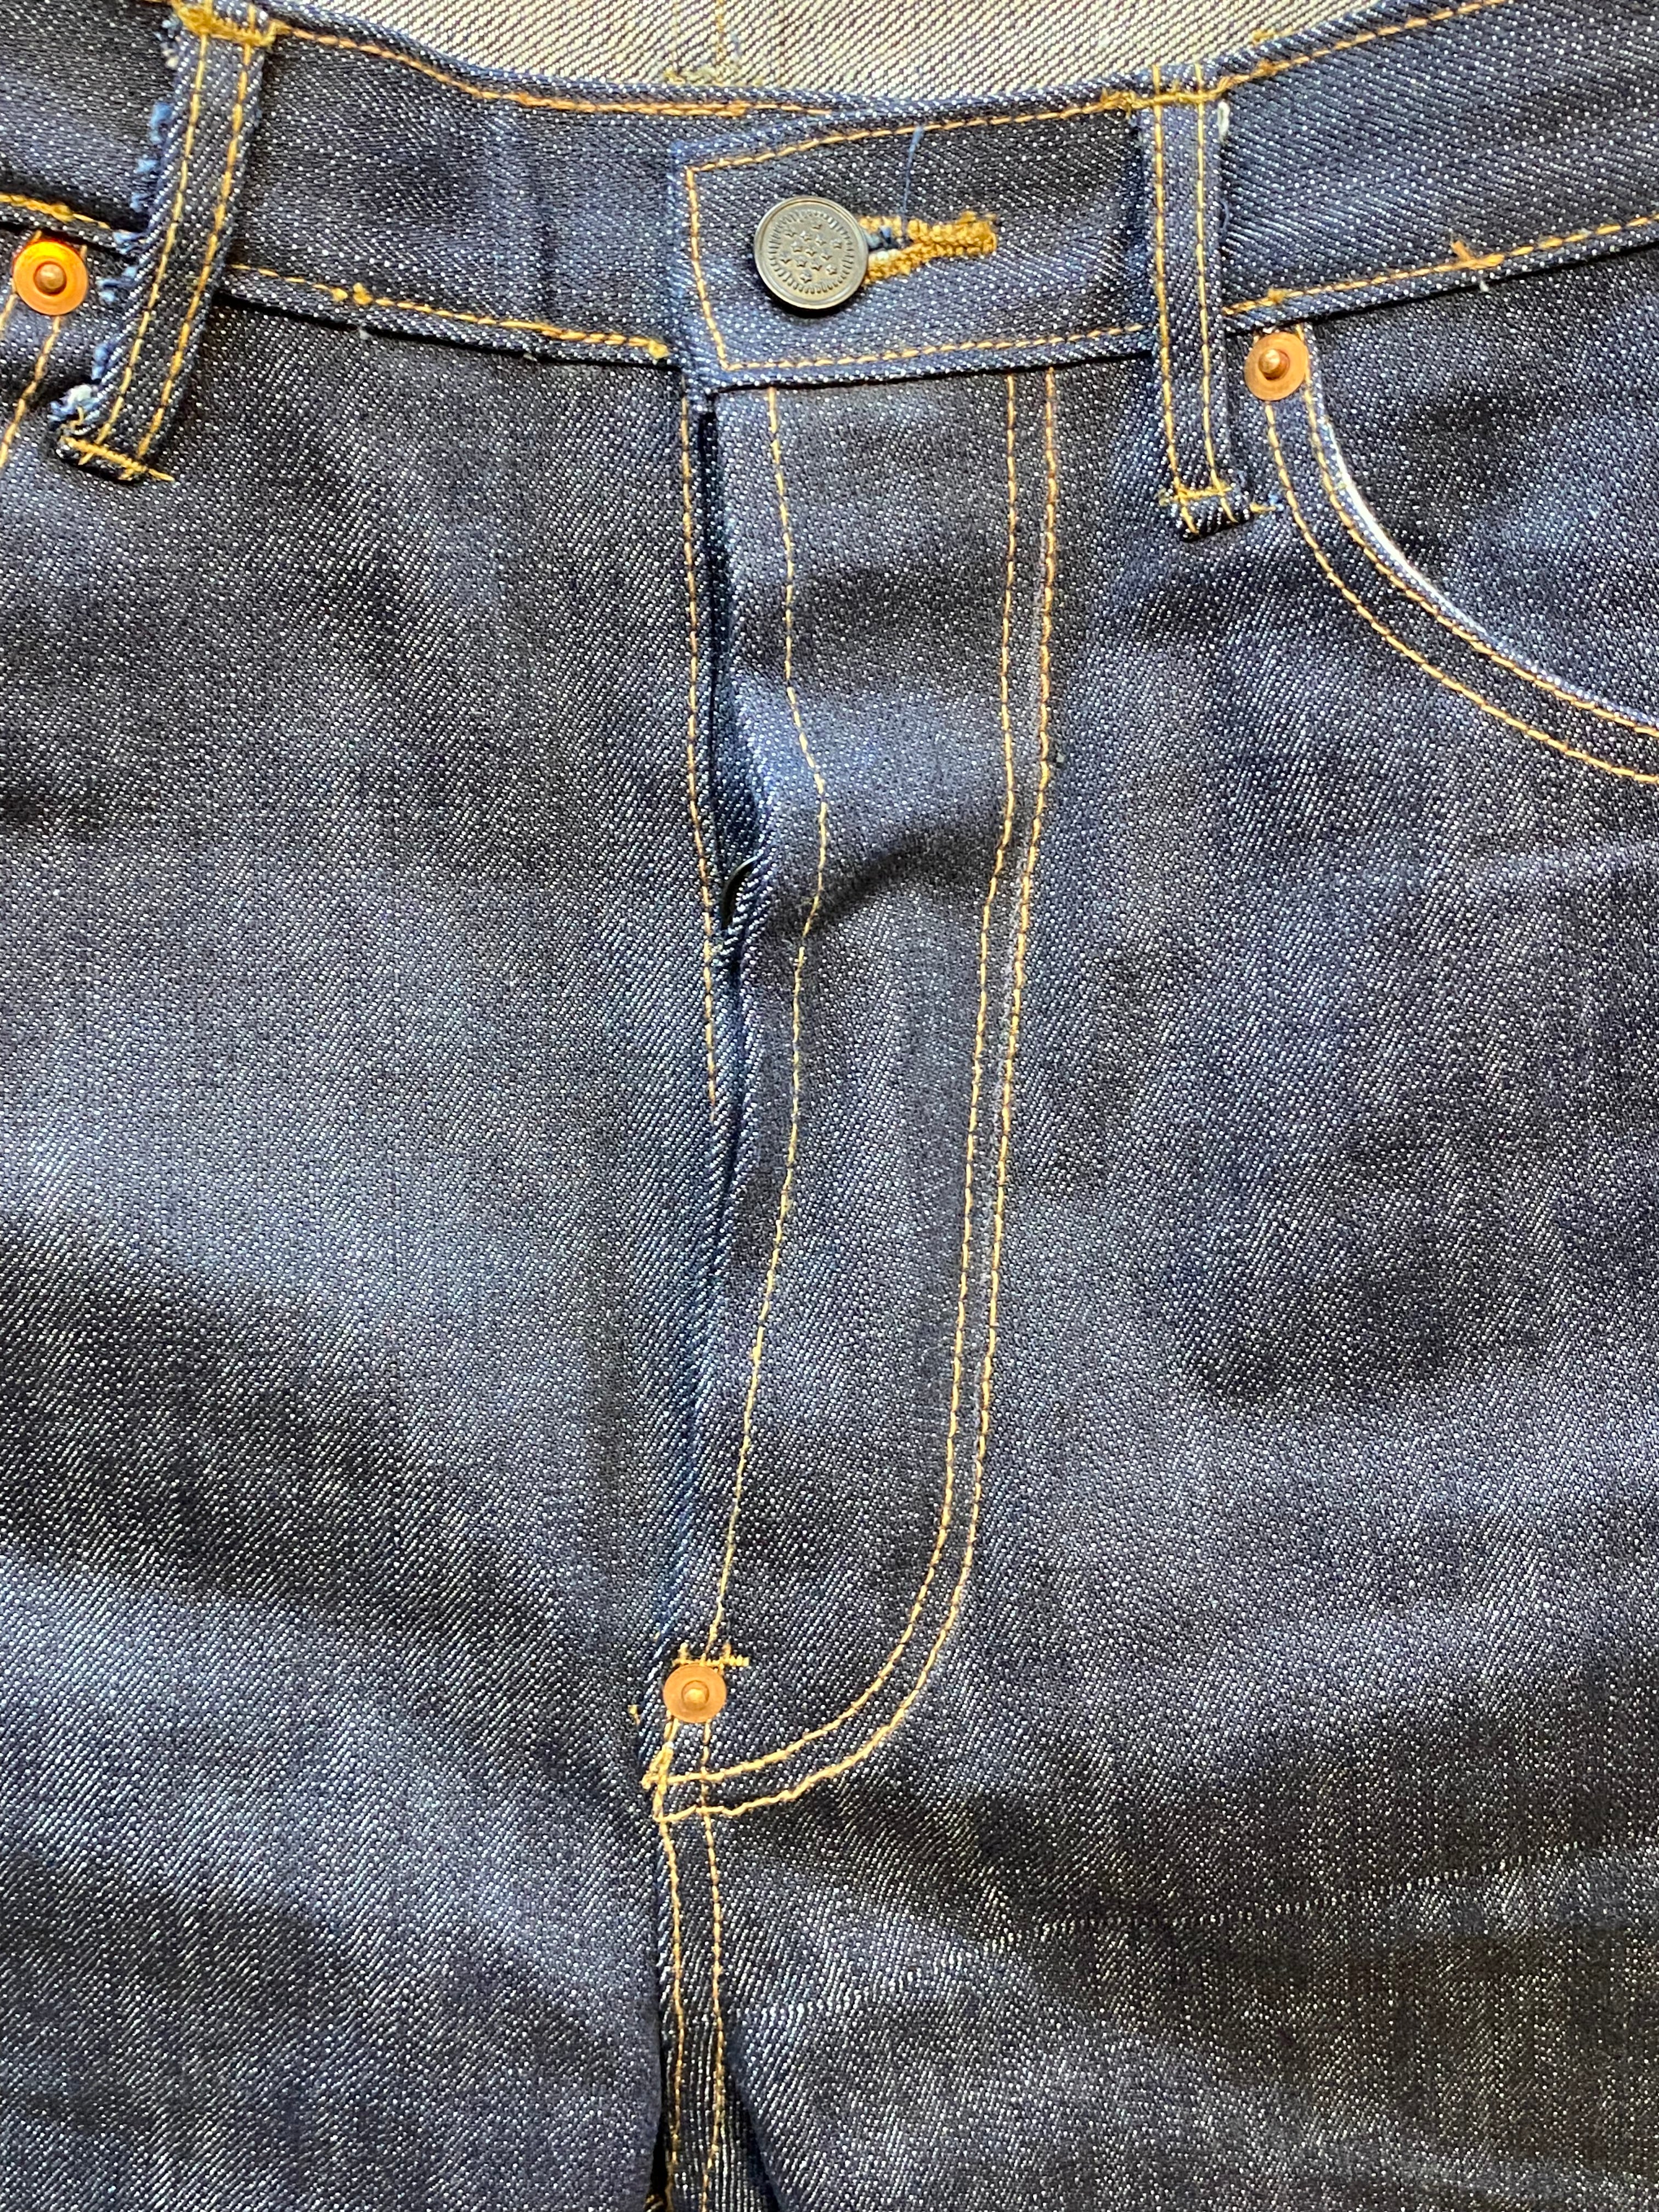 Klassische 50er Jahre Workwear Jeans, Trousers, Blue-Denim, De Brabander Mfg. Co